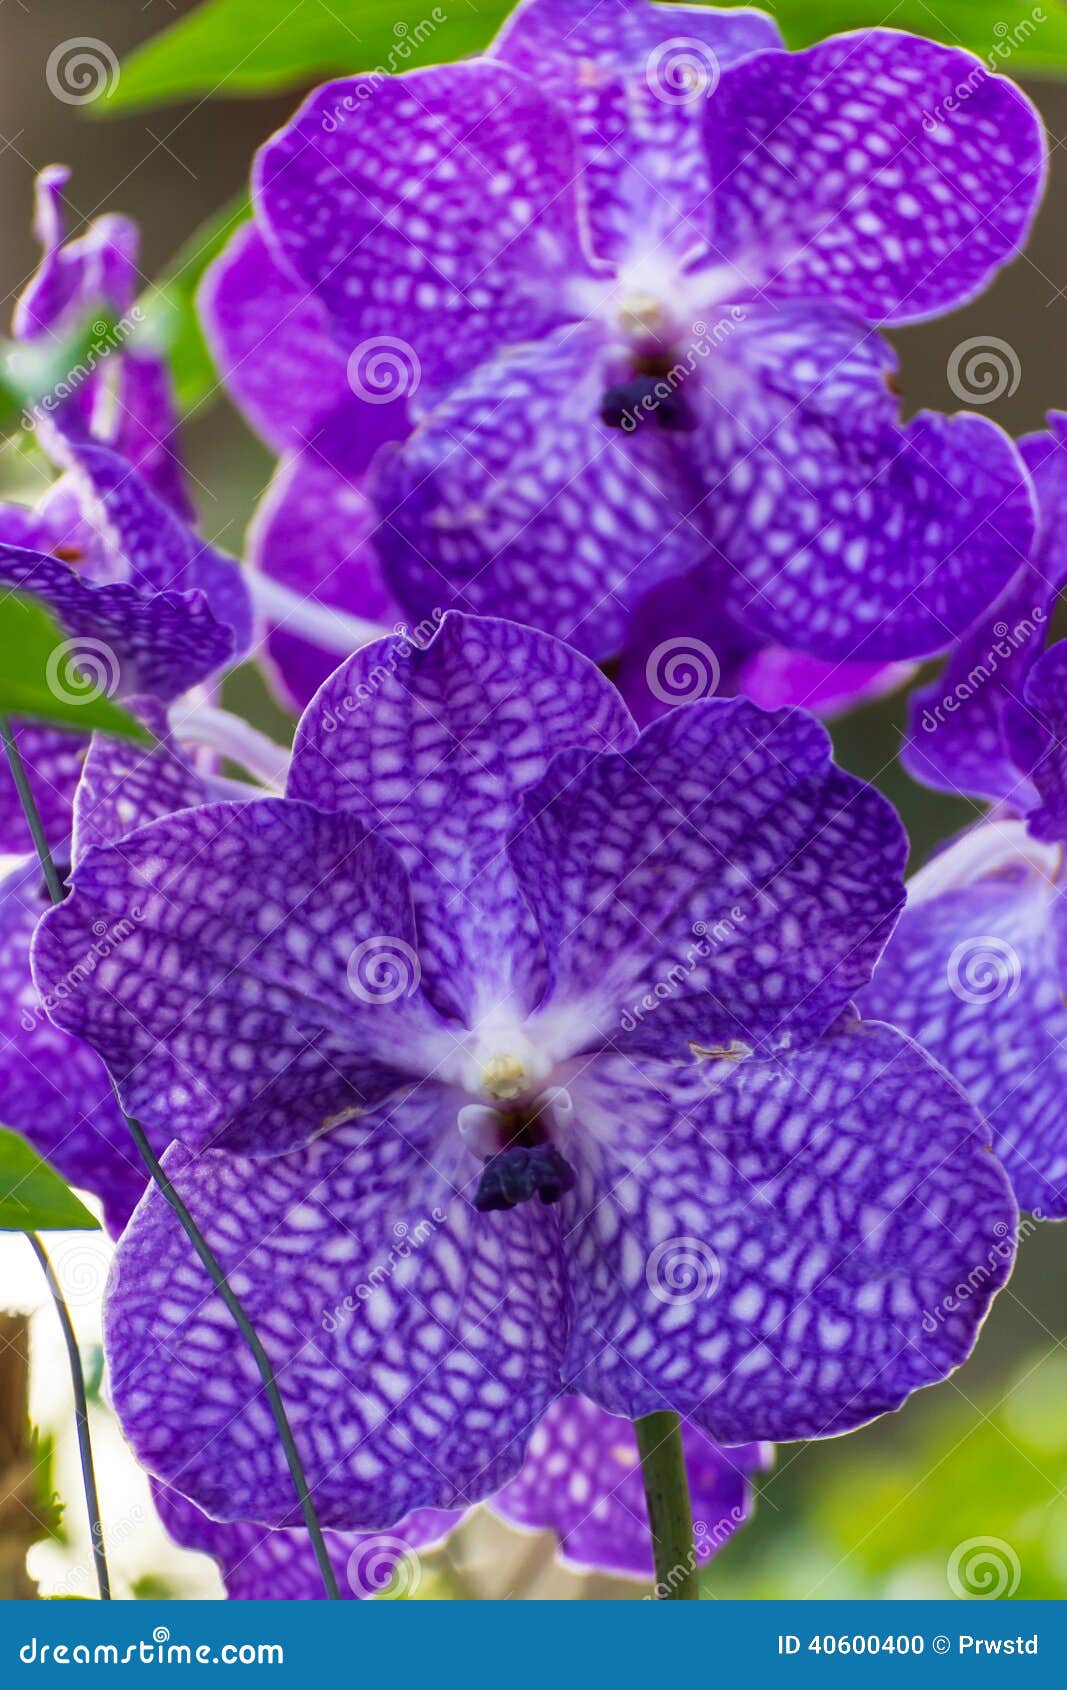 Purple Vanda Orchid stock photo. Image of macro, foreground - 40600400